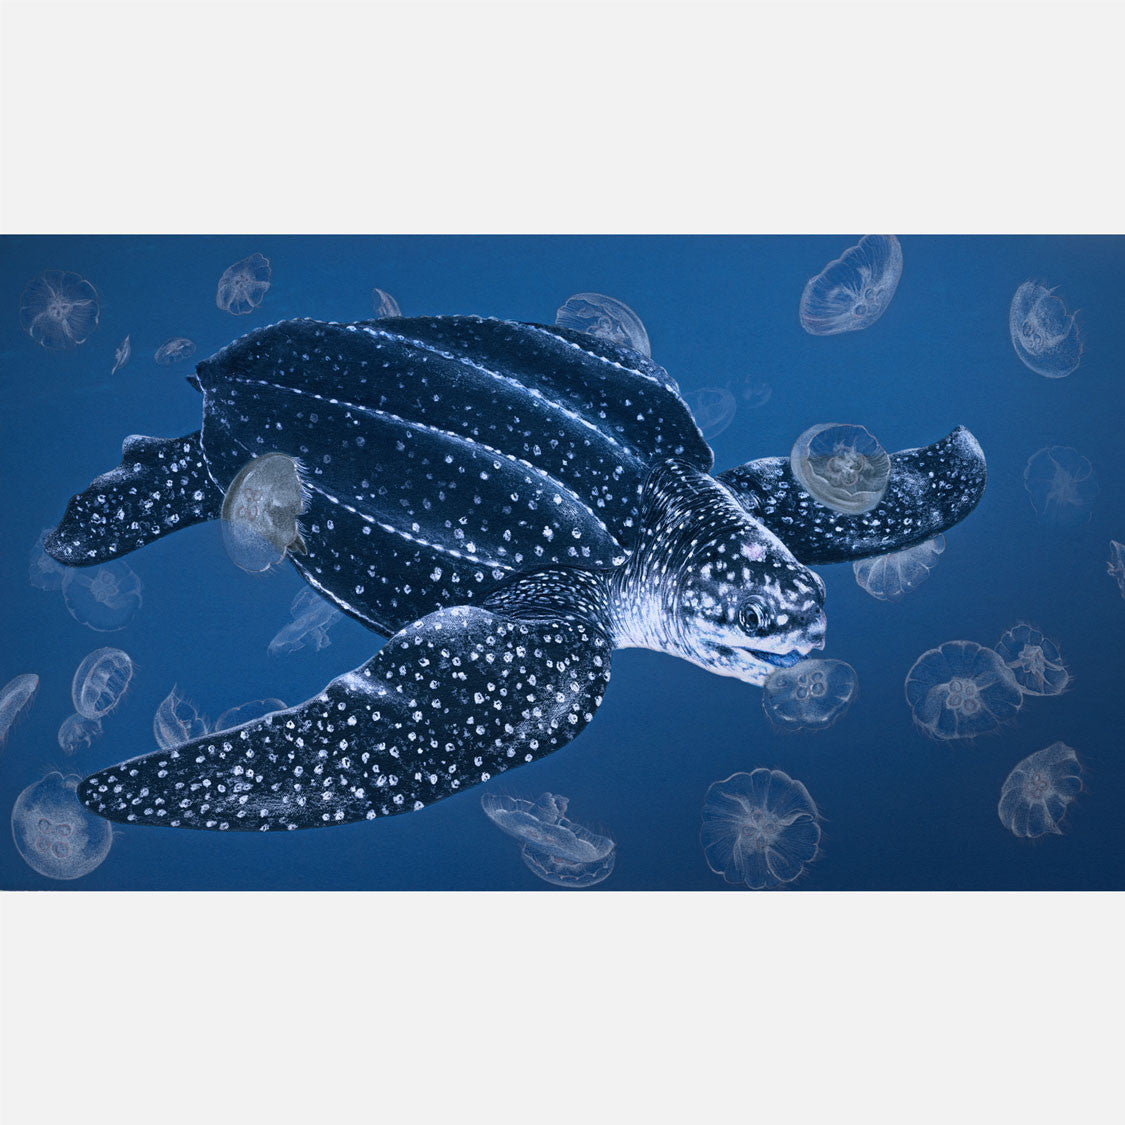 This lovely illustration is of a leatherback sea turtle (Dermochelys coriacea) feeding on moon jellies.